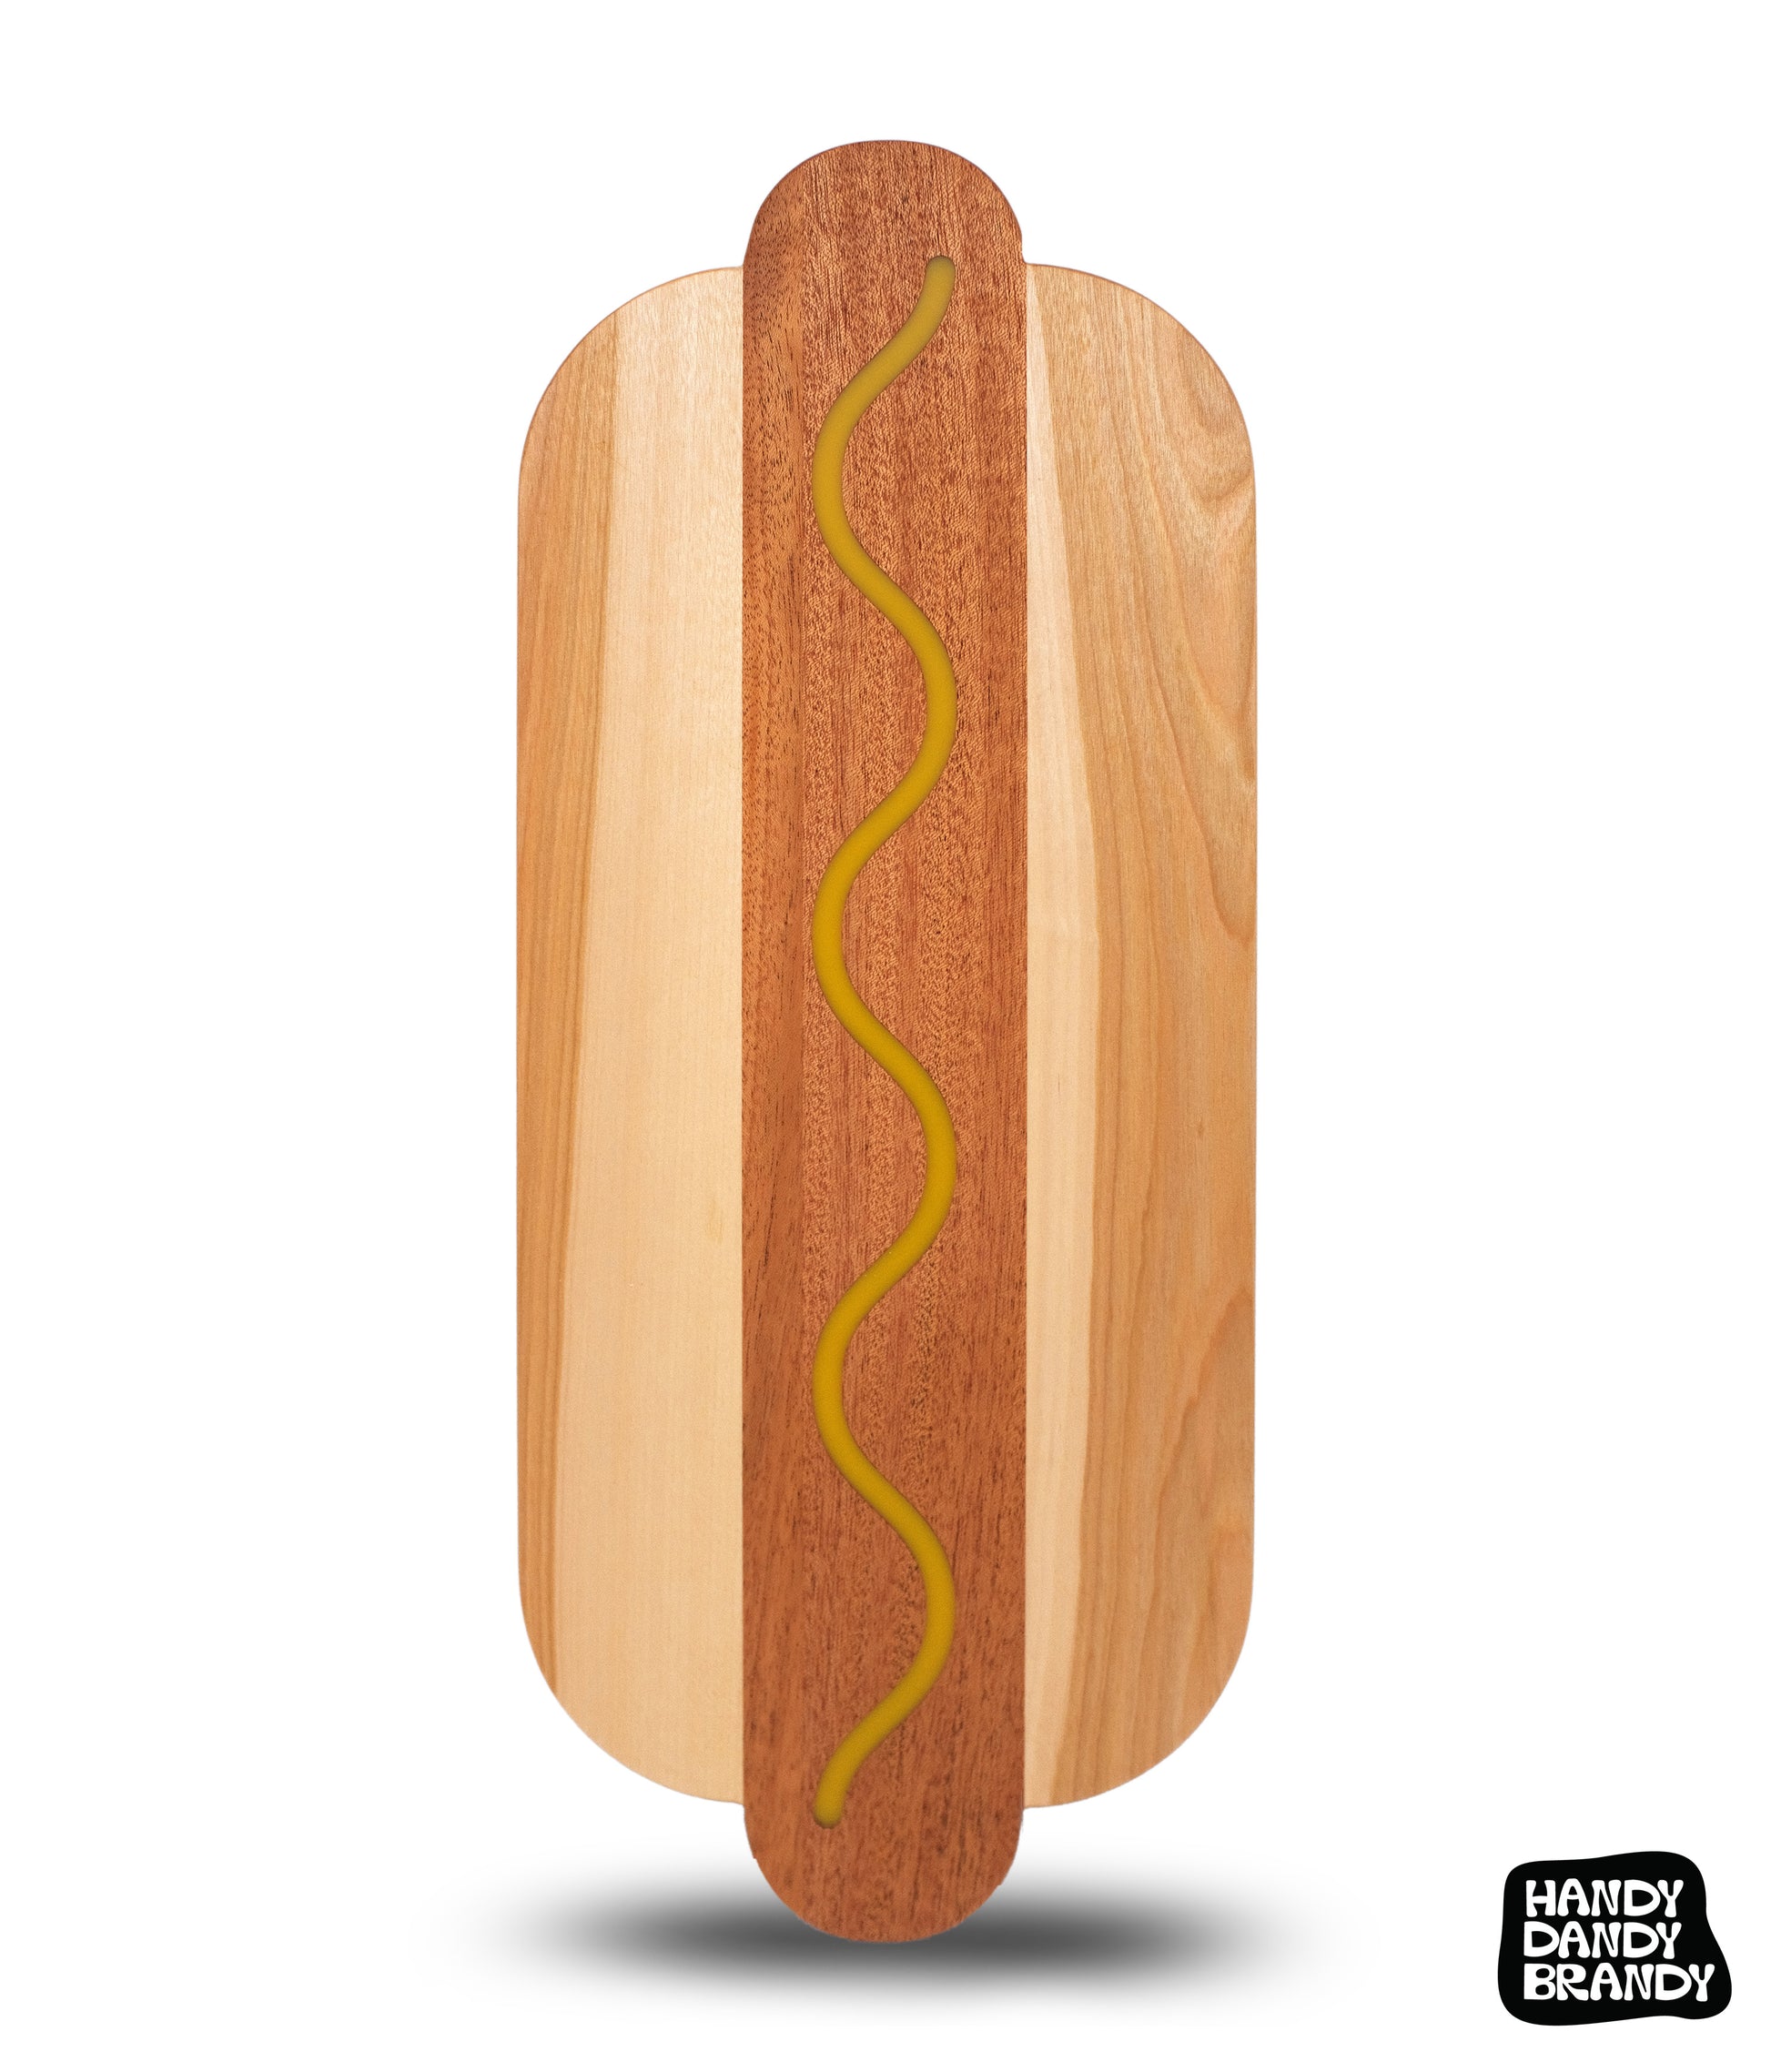 hot dog shaped cutting board made of mahogany and birch